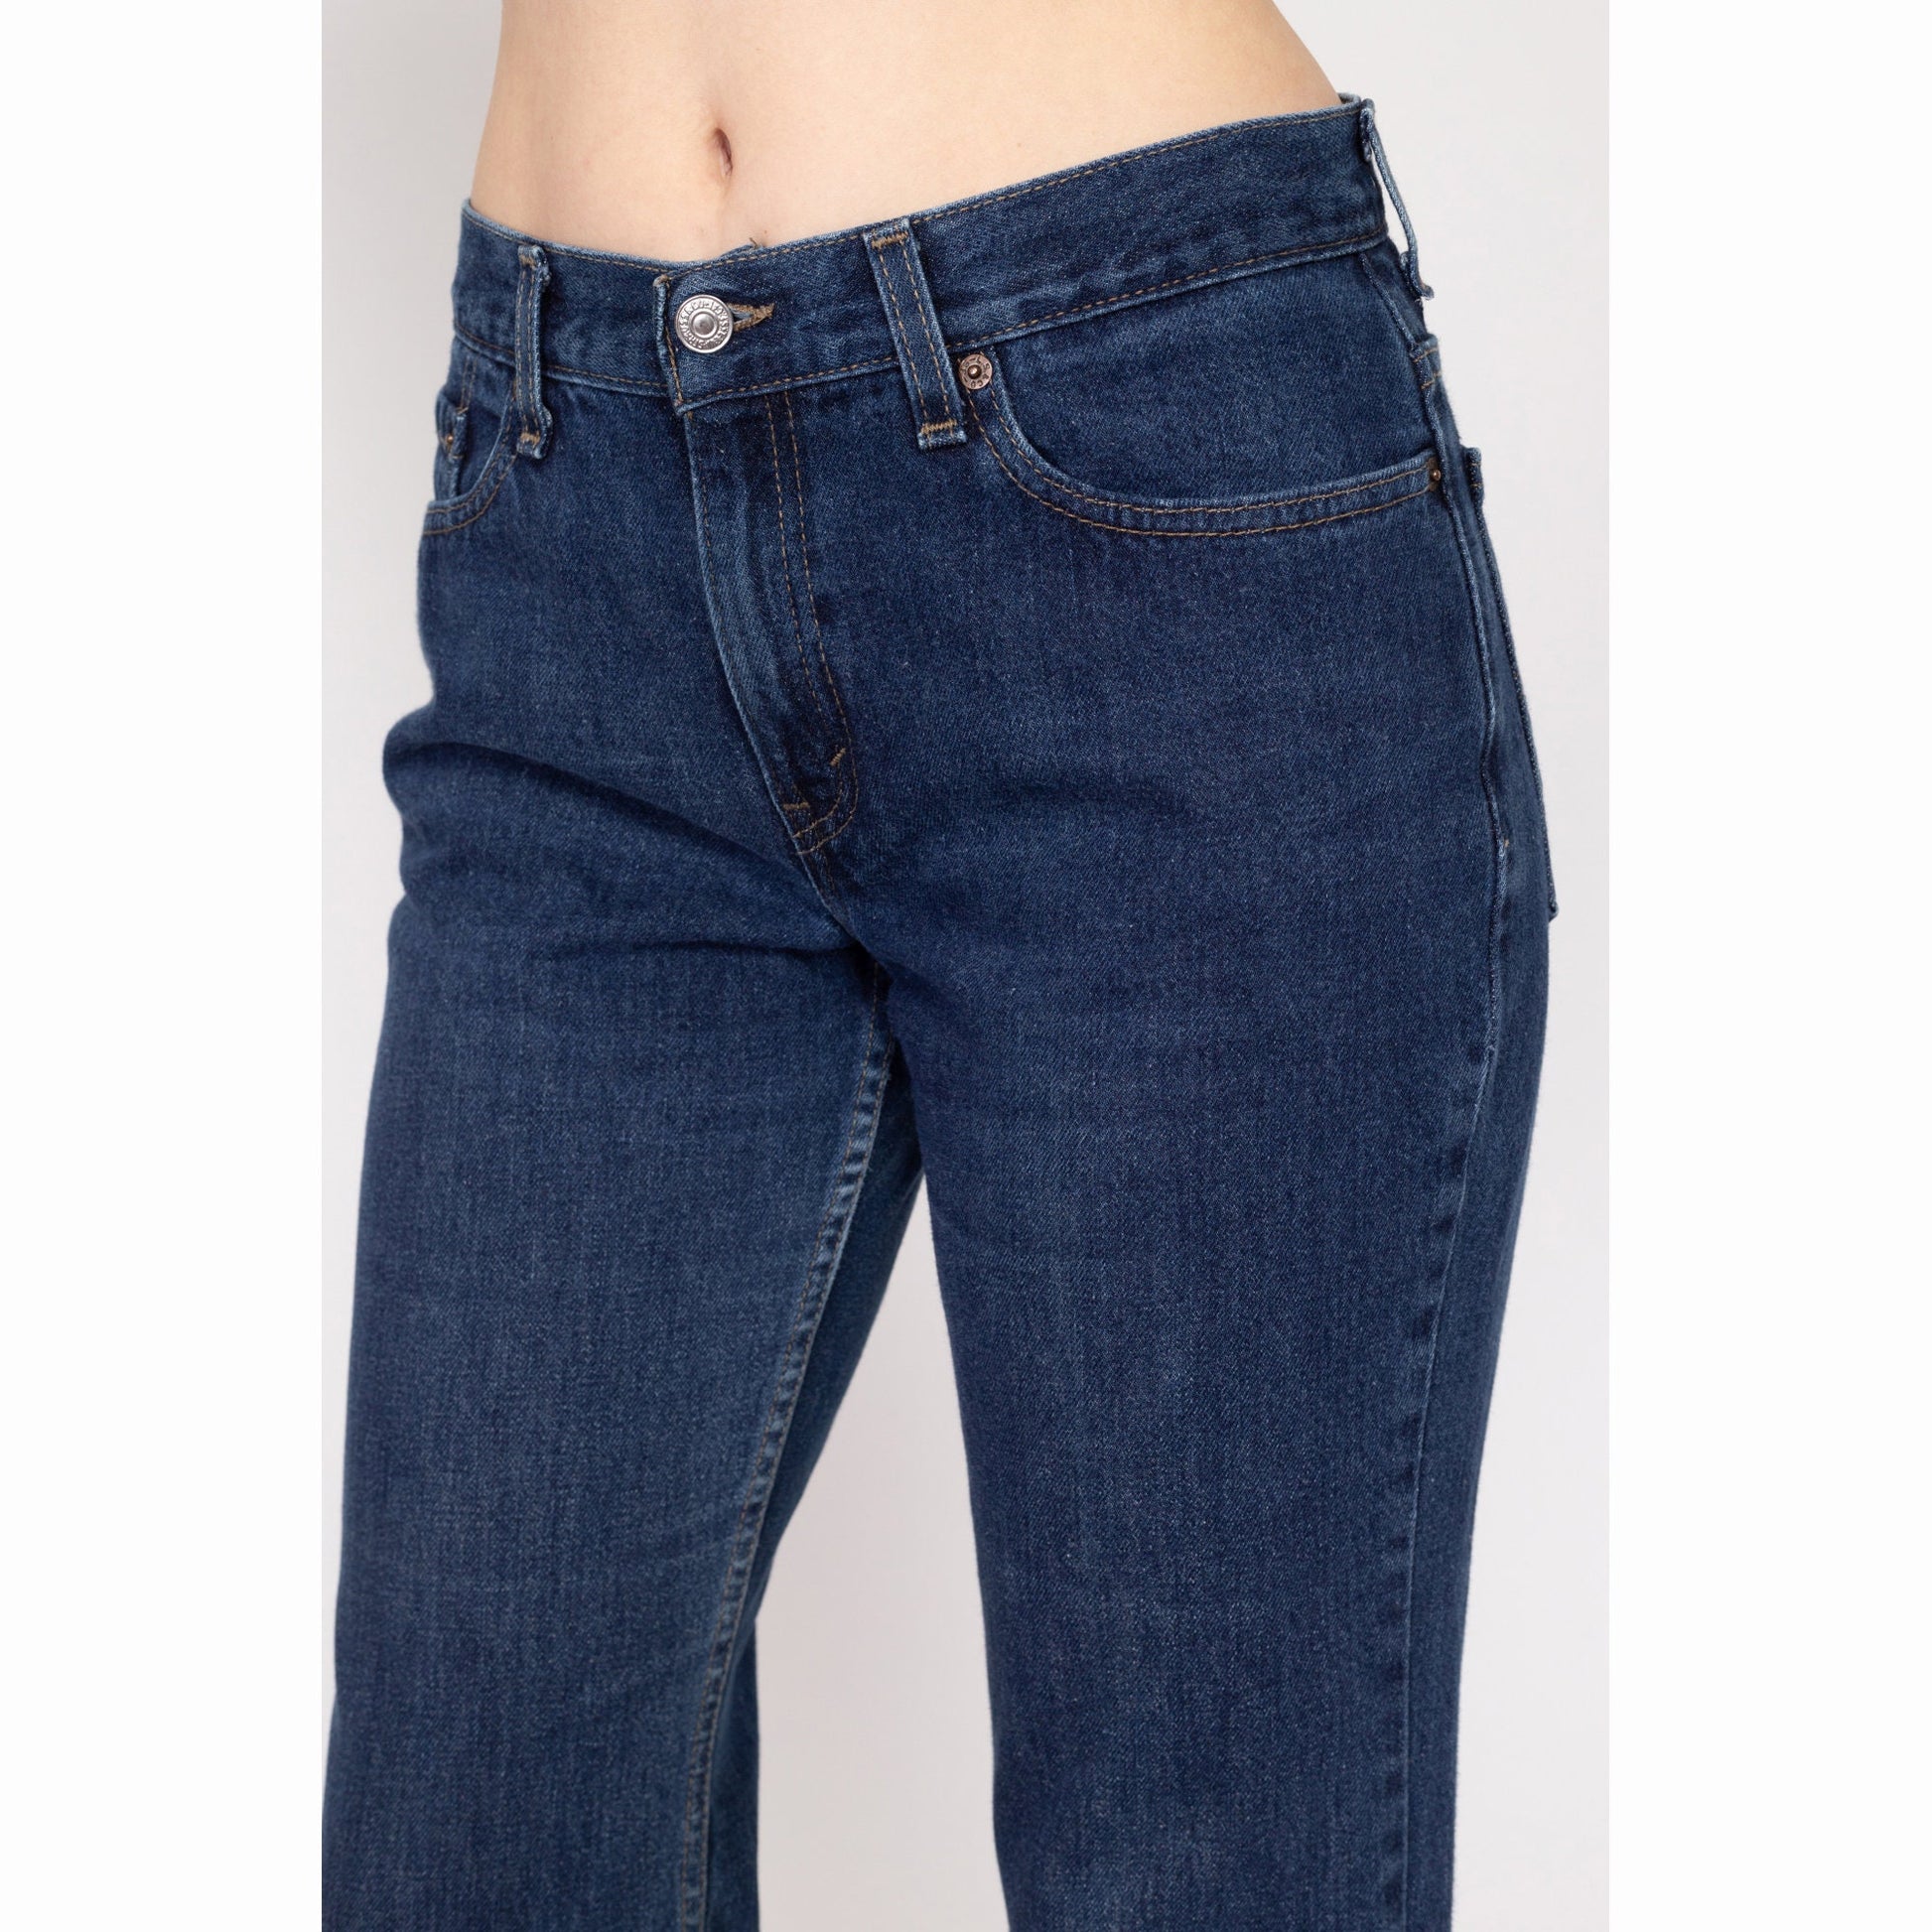 Medium 80s Levis 515 Dark Wash Denim Bootcut Jeans 30" | Vintage Levi's Mid Rise Flared Jeans